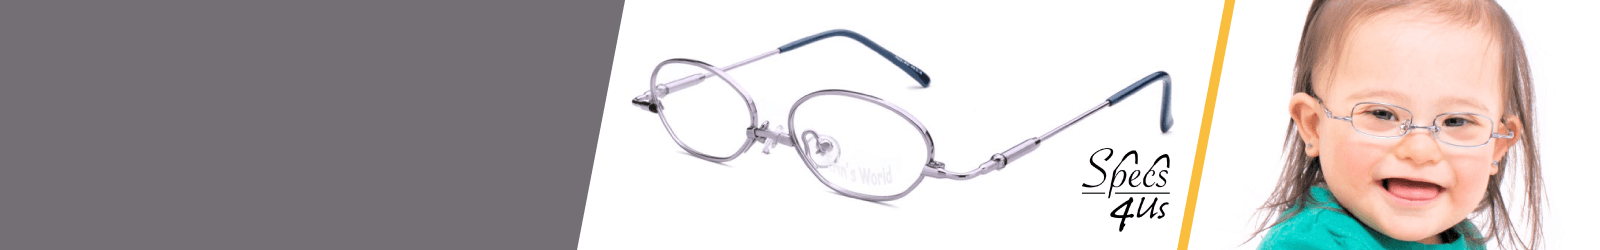 White Specs4us Eyewear for Kids